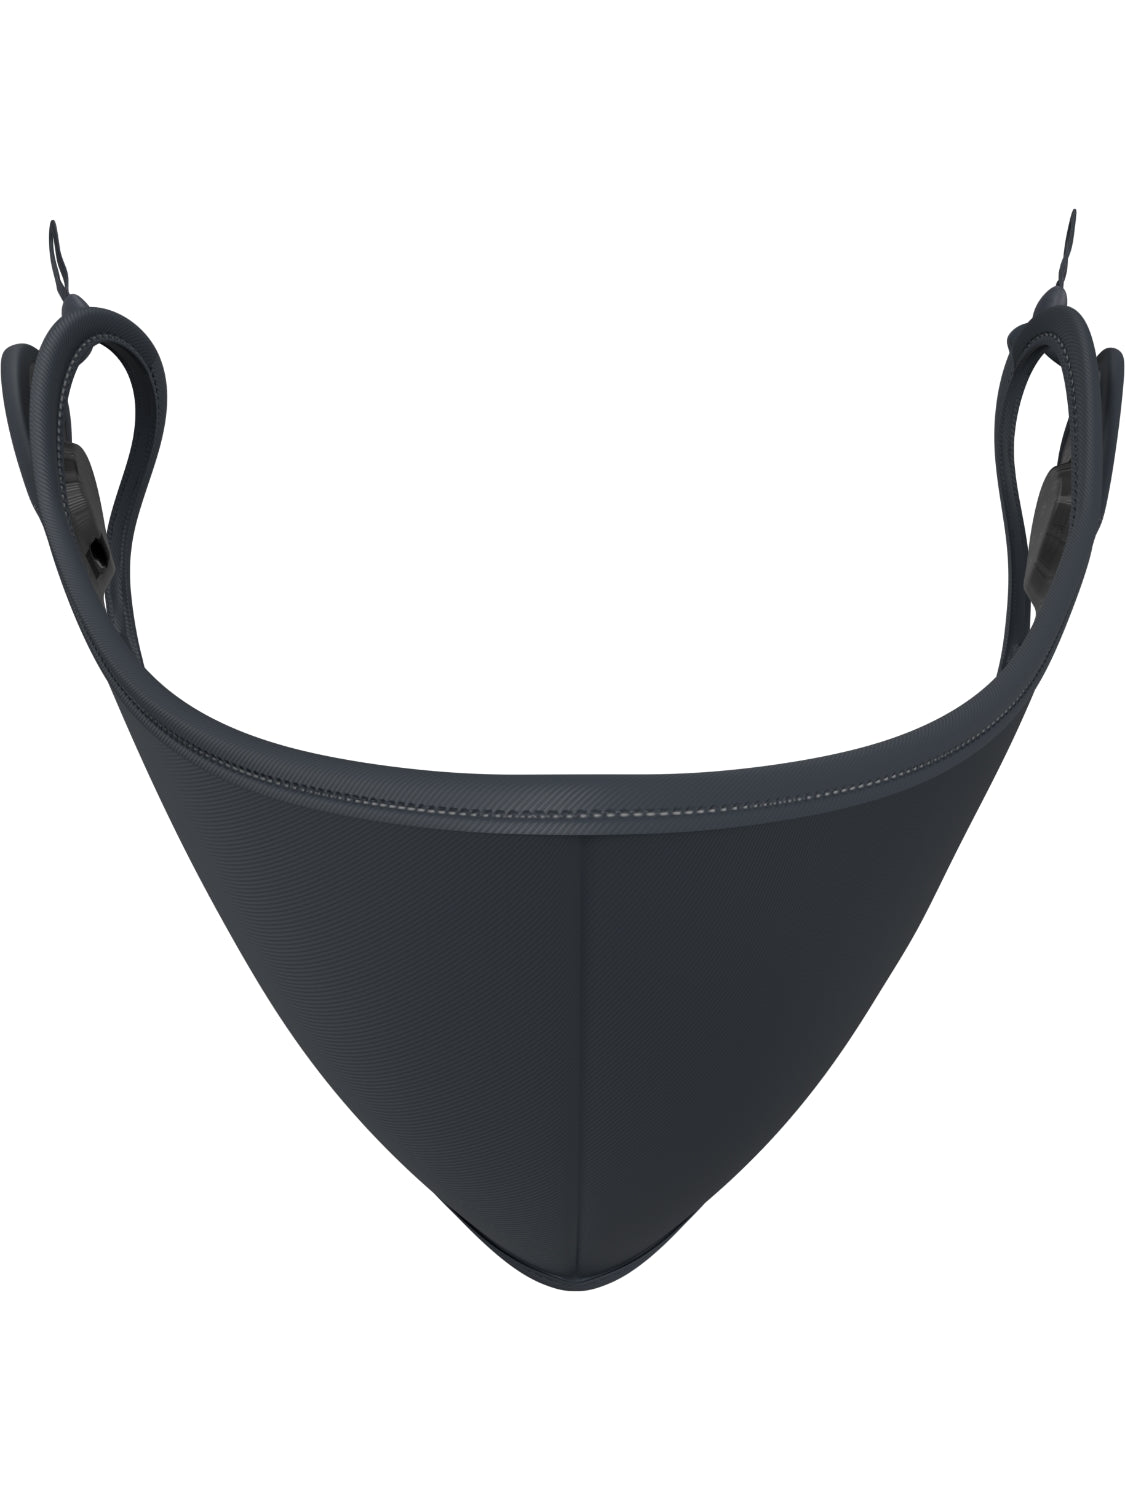 Masque de sport Bluetooth waterproof ARIEL